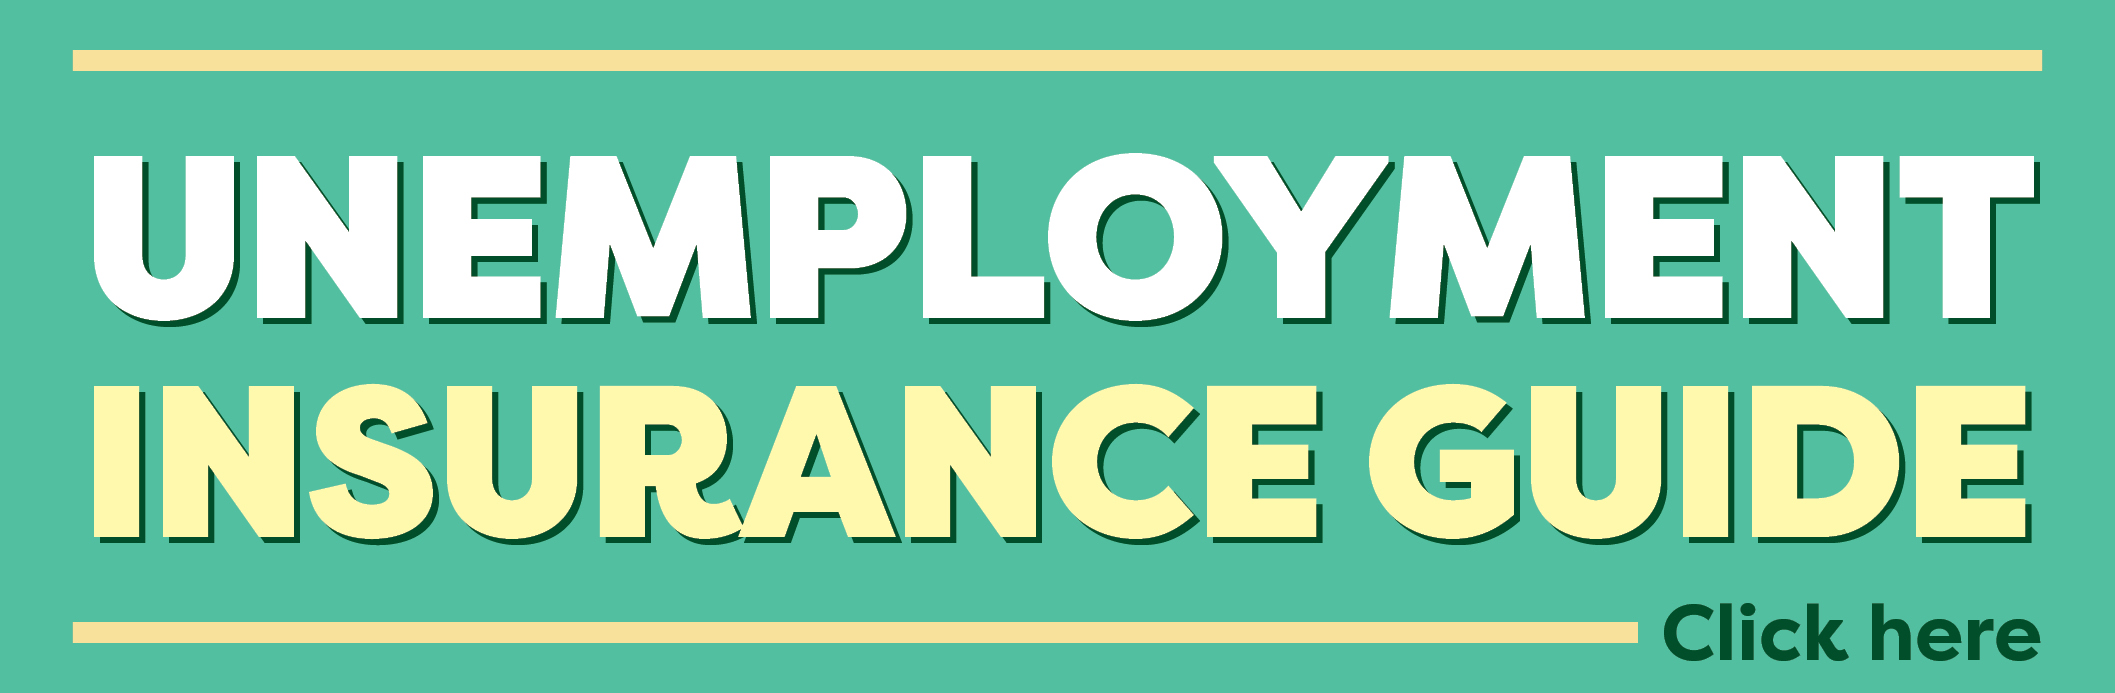 Unemployment Insurance Guide